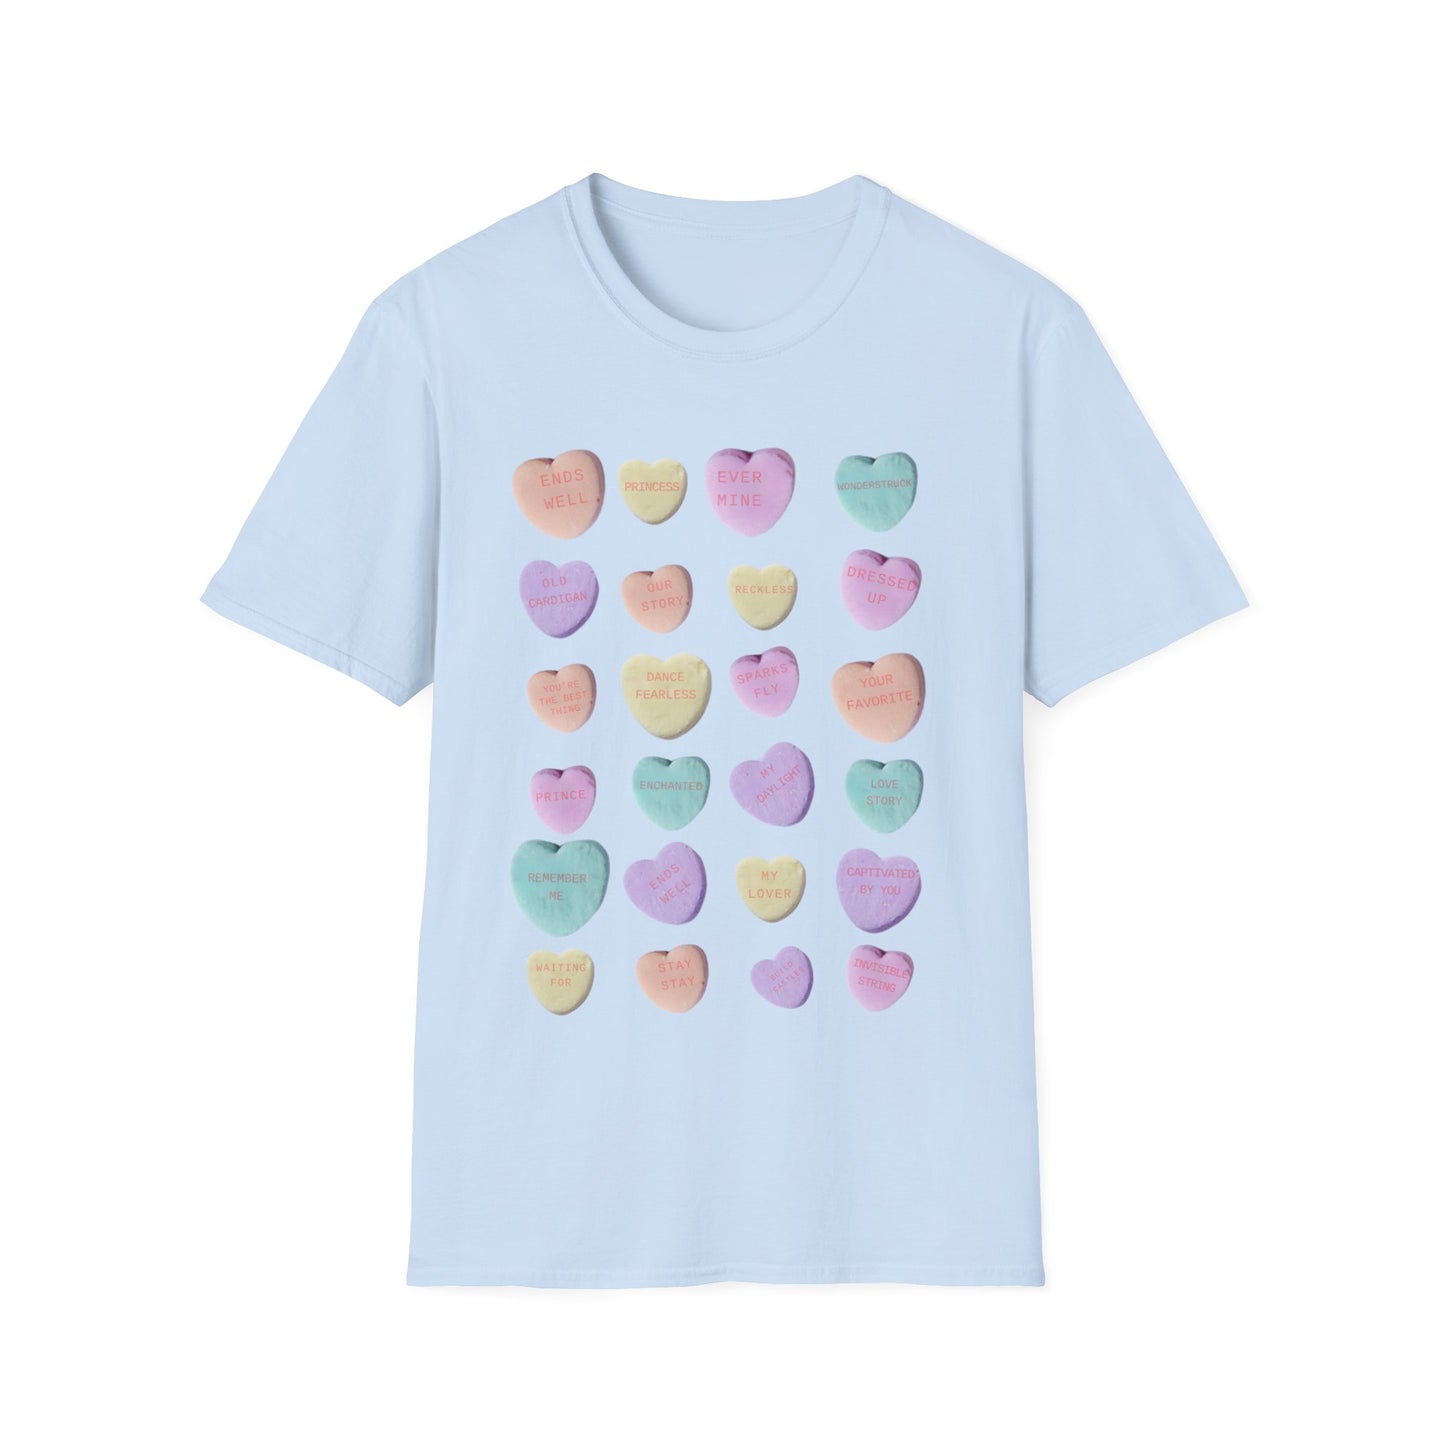 Swiftee Sweetheart t-shirt